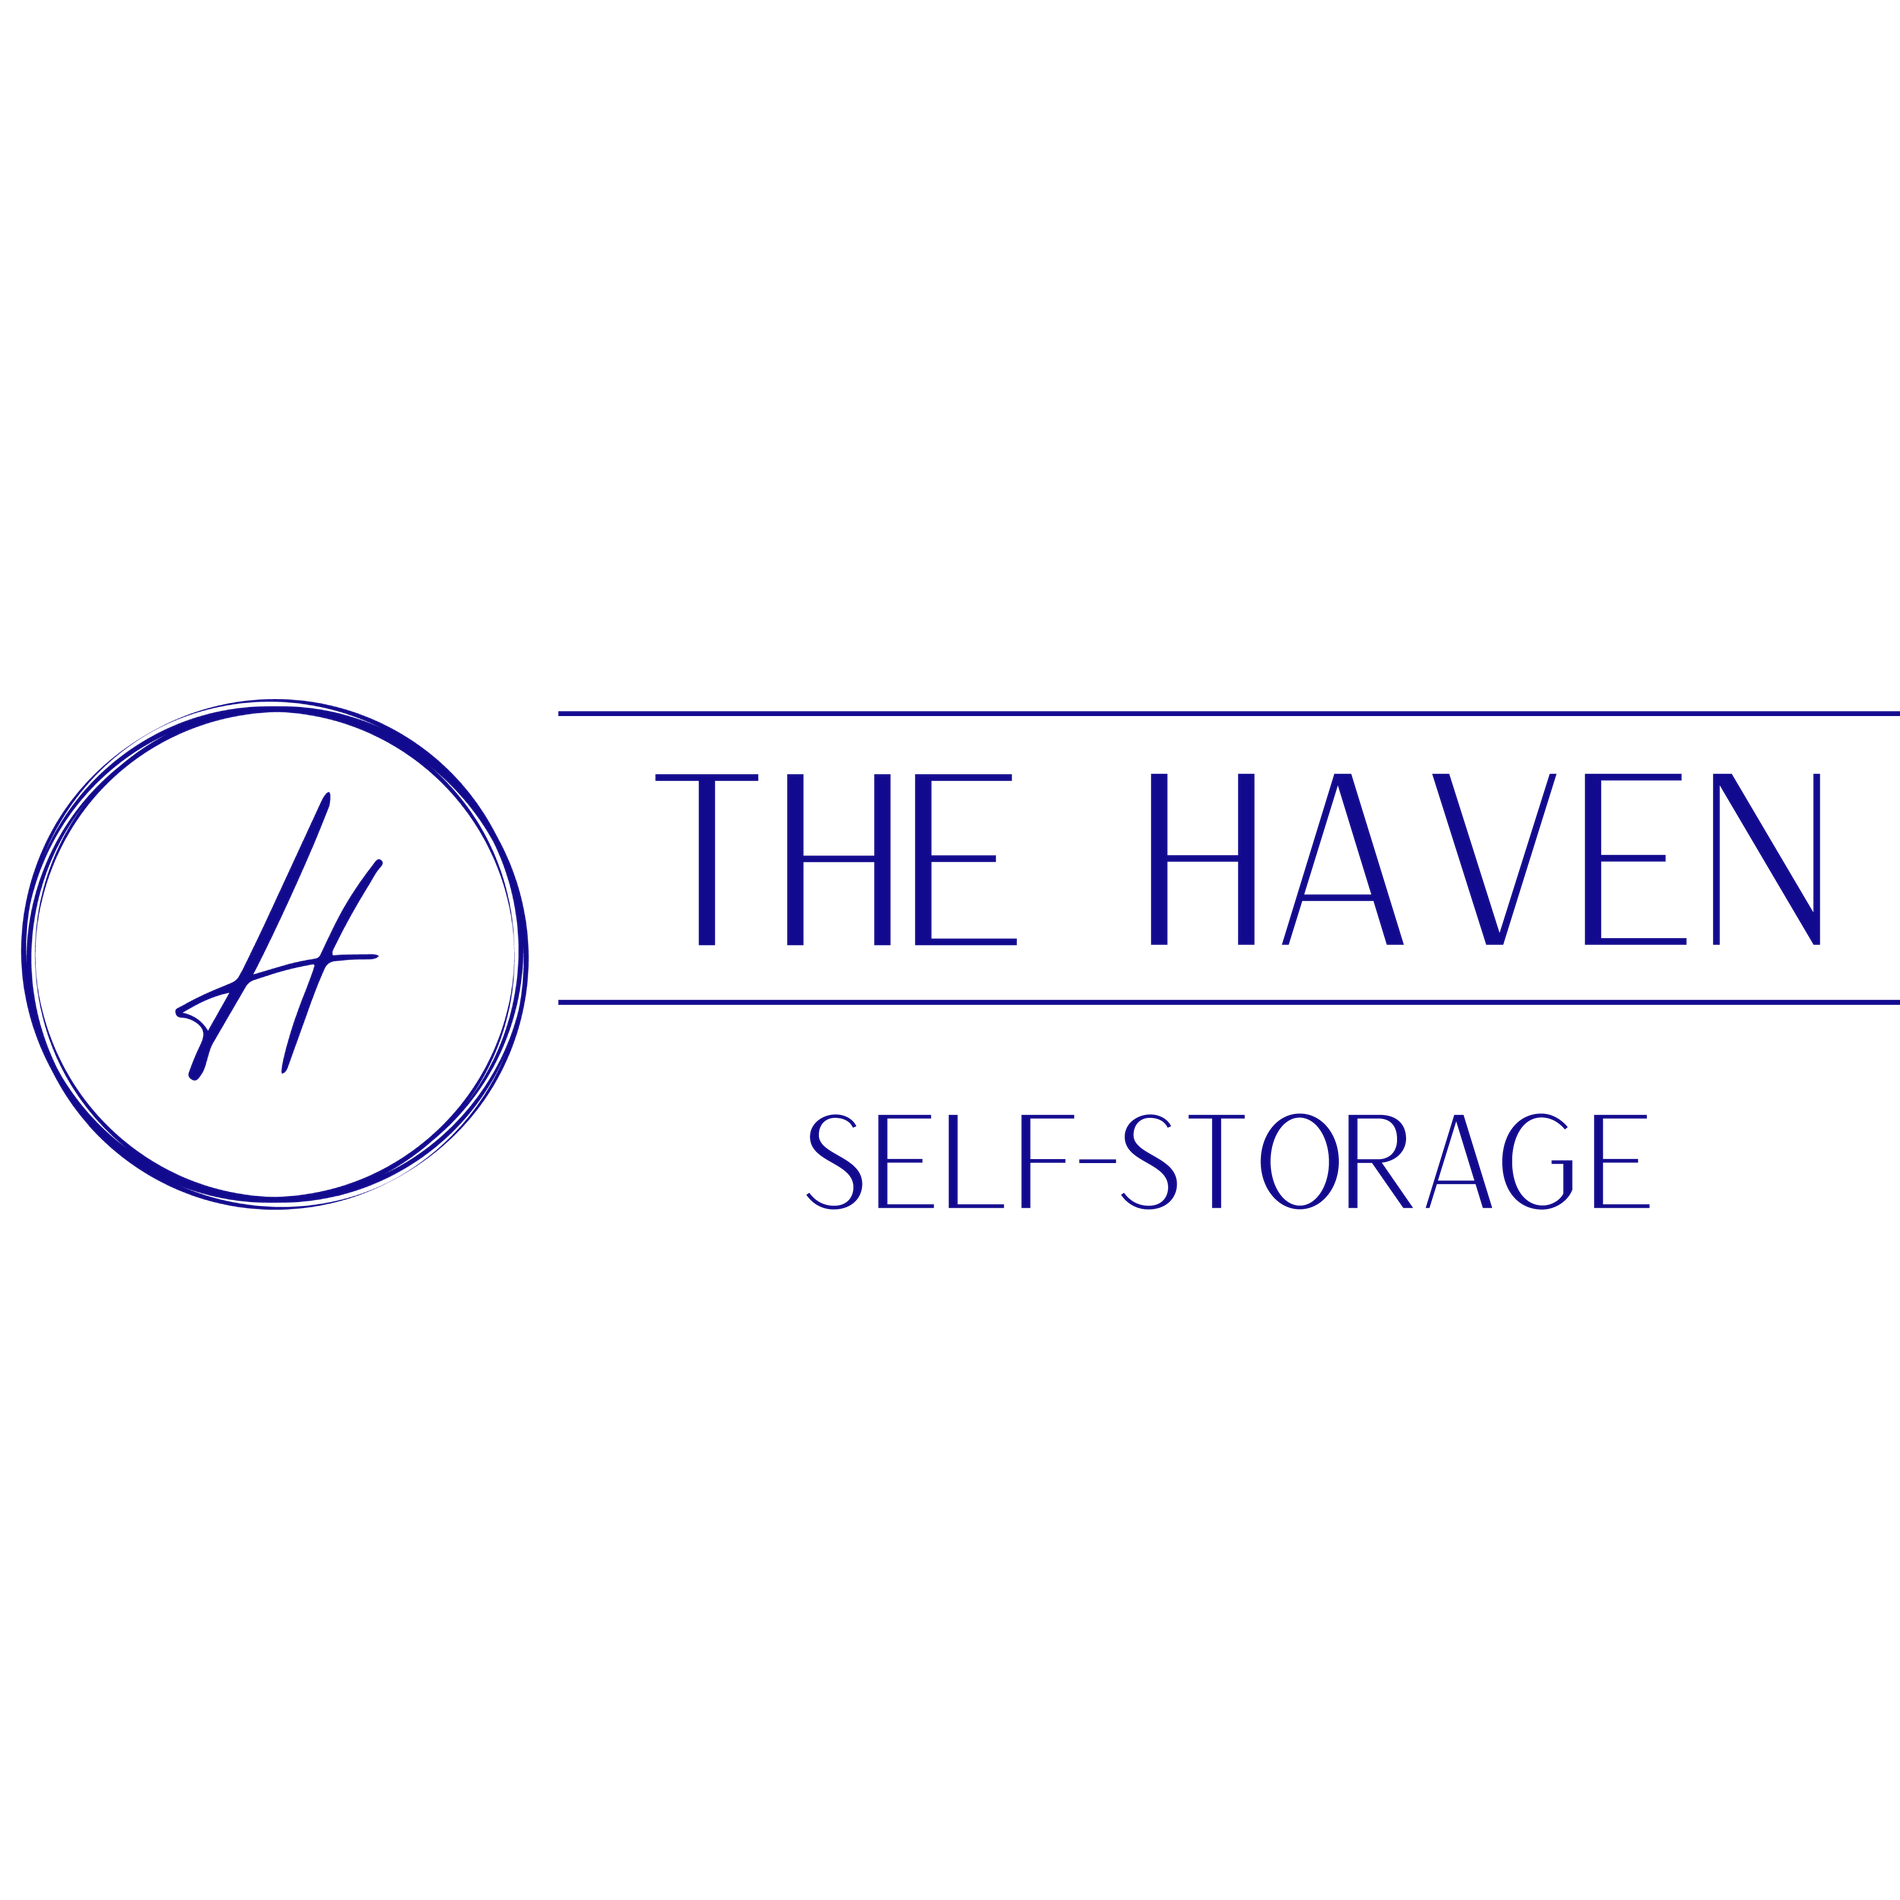 The Haven Self Storage